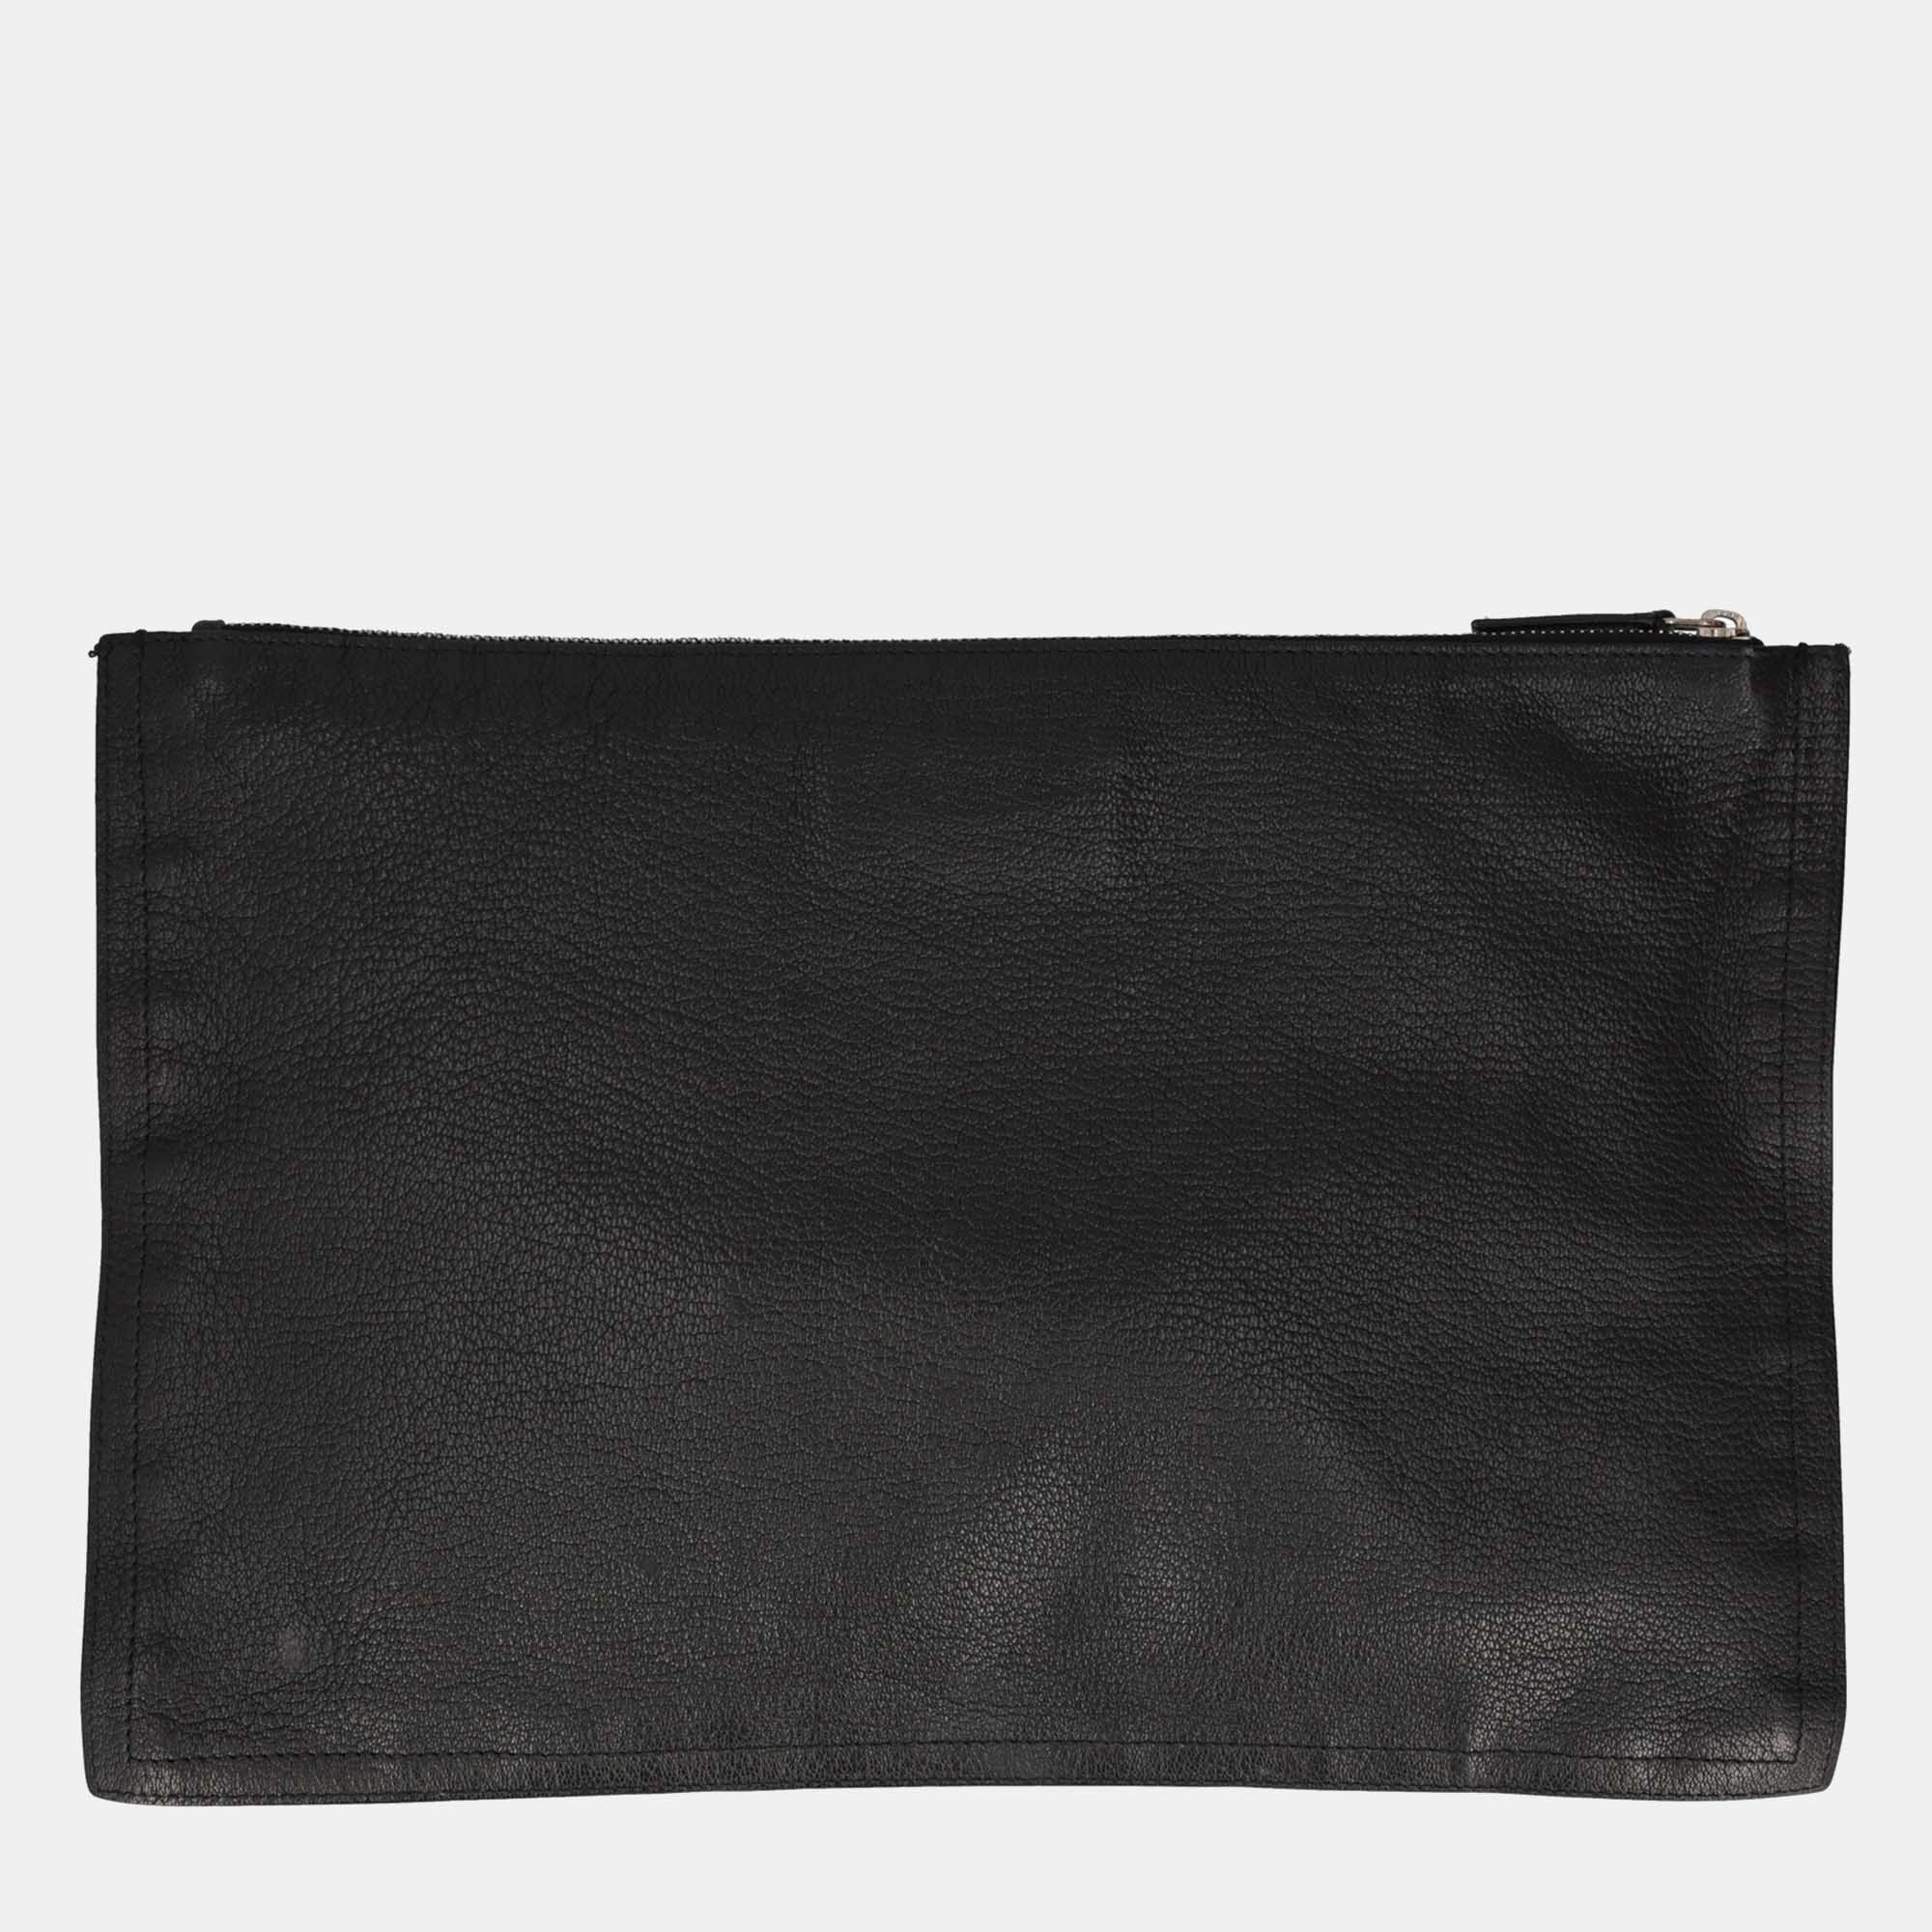 Givenchy Antigona -  Women's Leather Clutch Bag - Black - One Size